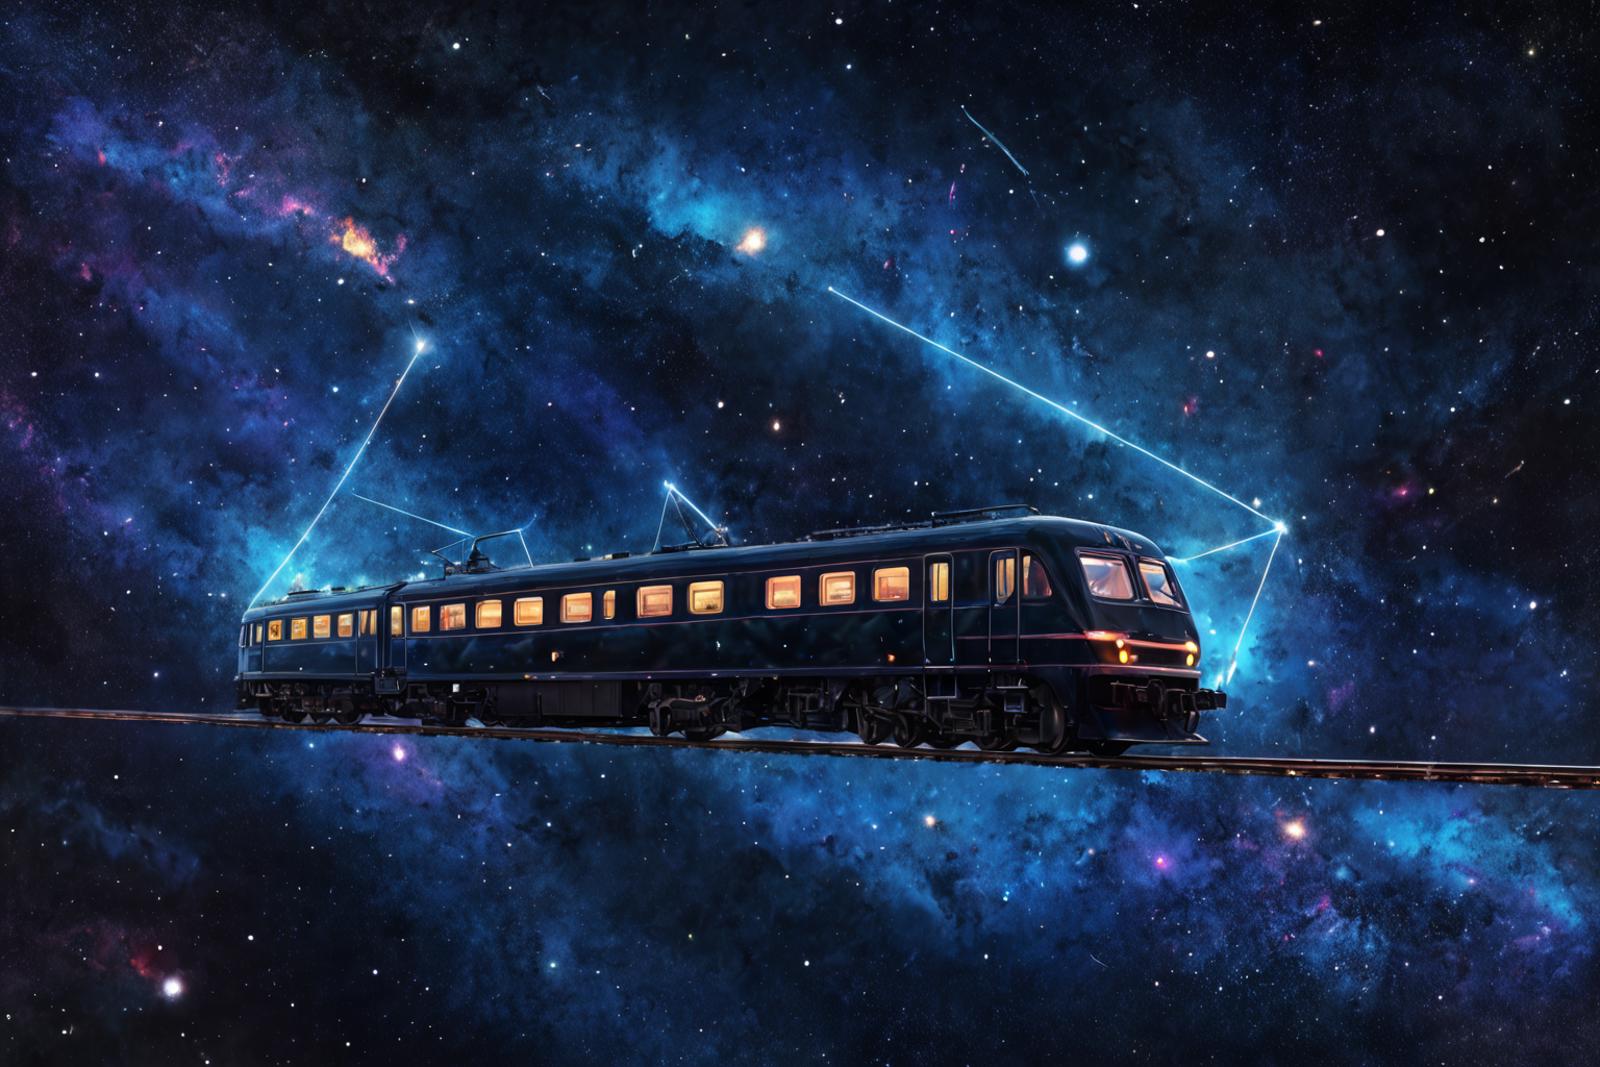 A Black Train Riding on Tracks Through the Stars